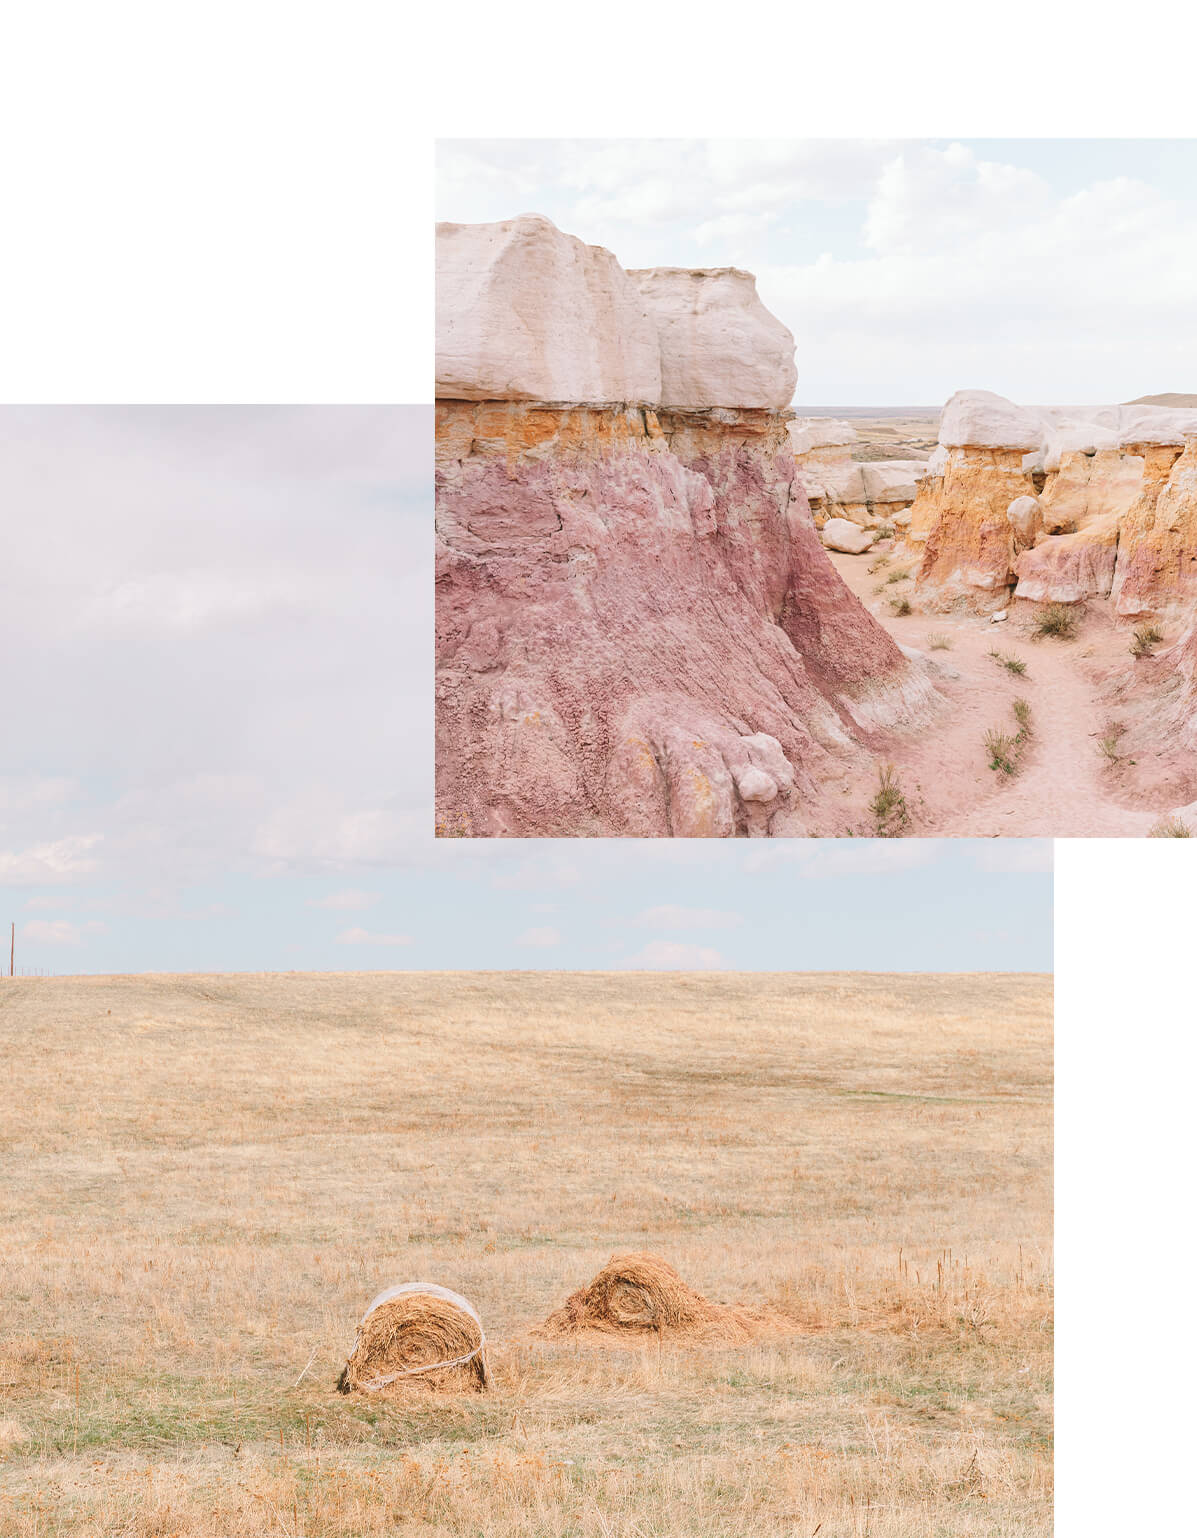 Two sprawling landscape photos by Brandon Lopez